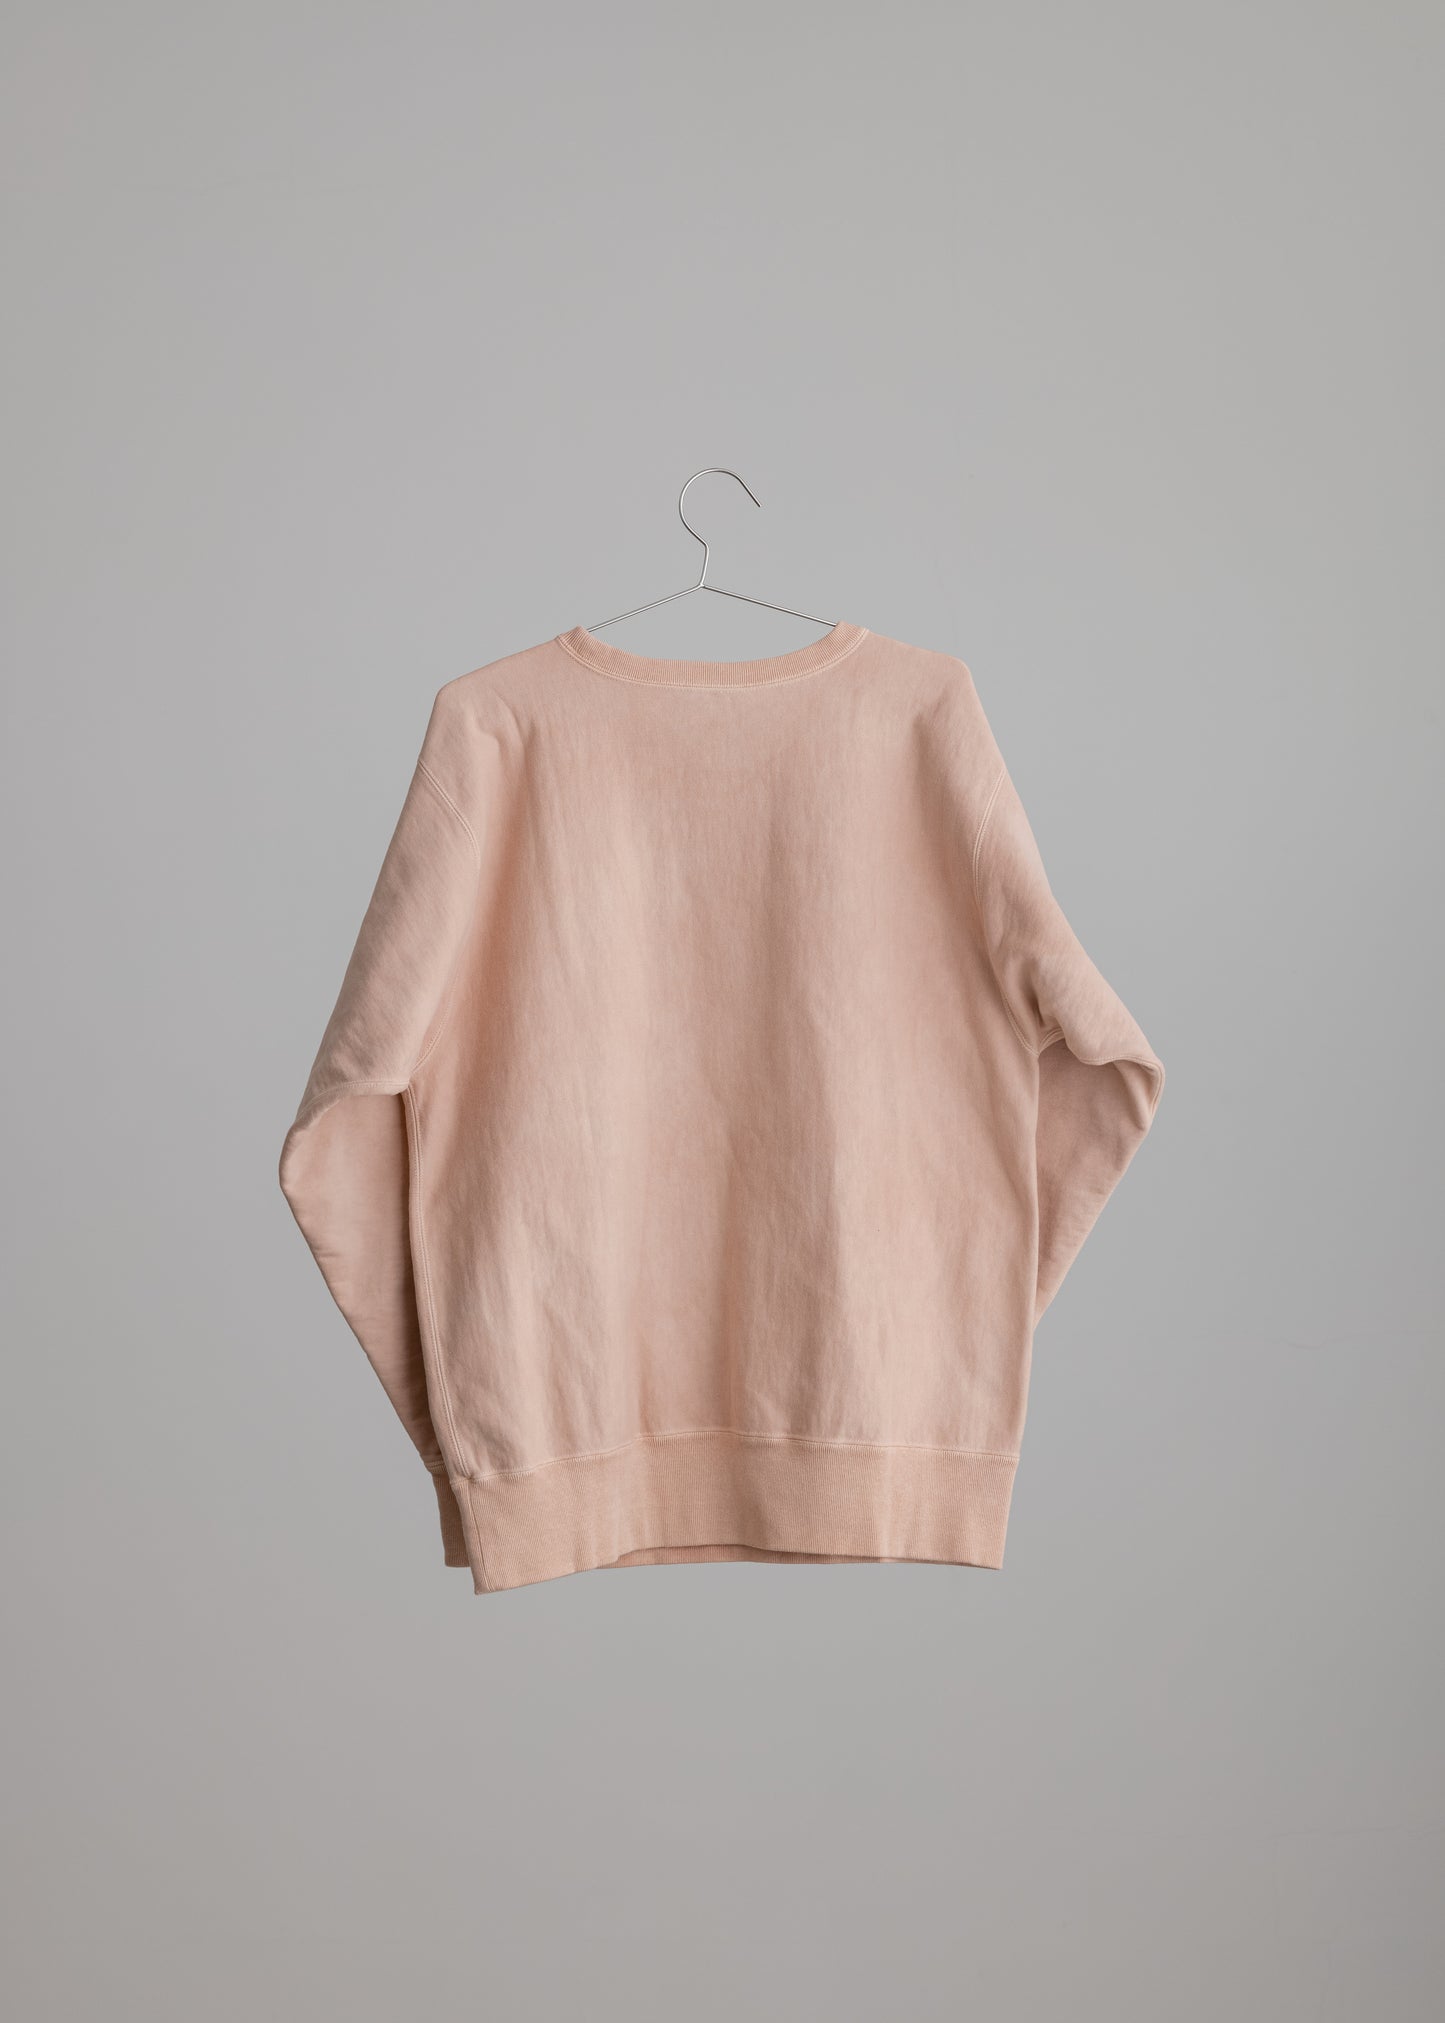 [ HAM IAM ] Regulations " UME garment dyed 梅染め " classic athletic sweat shirt c/# plum pink